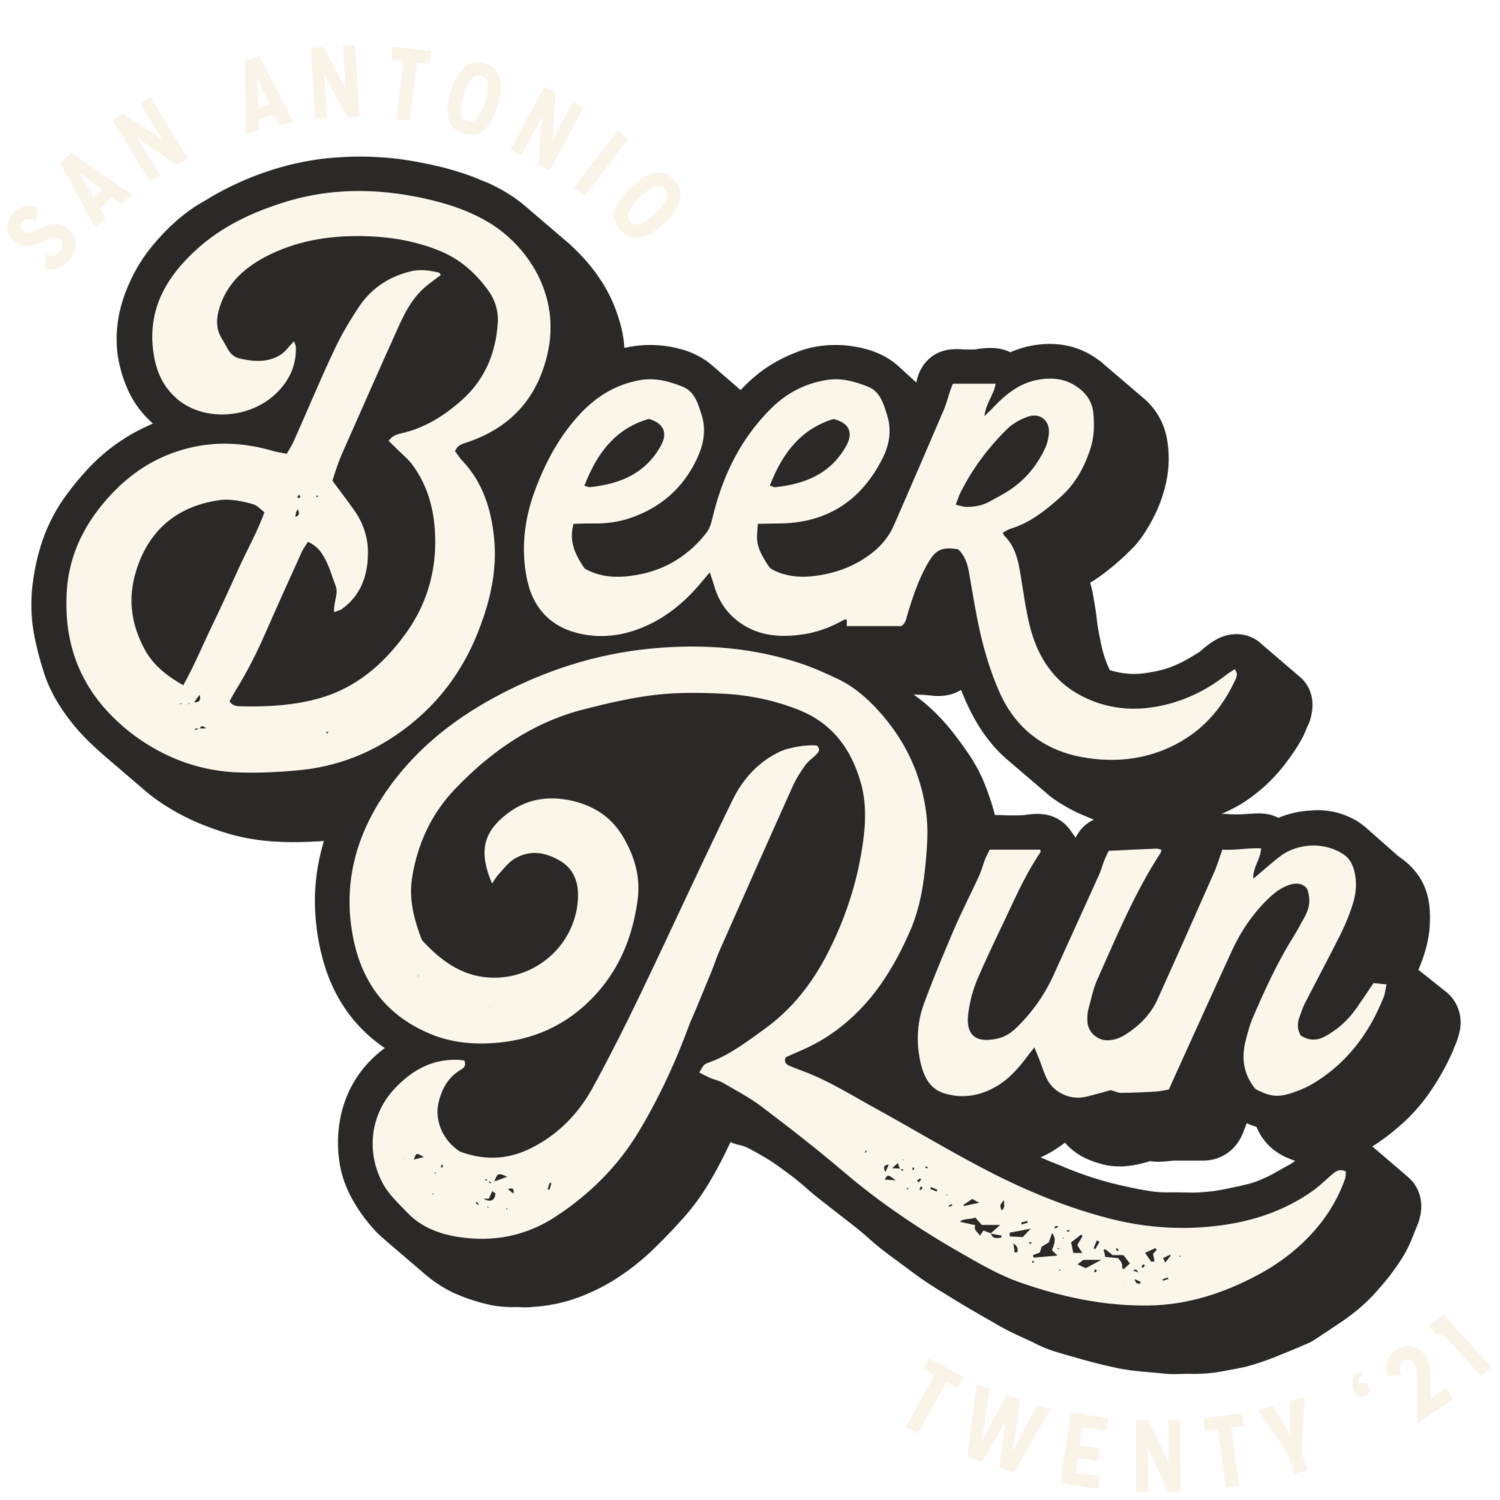 San Antonio Beer Run